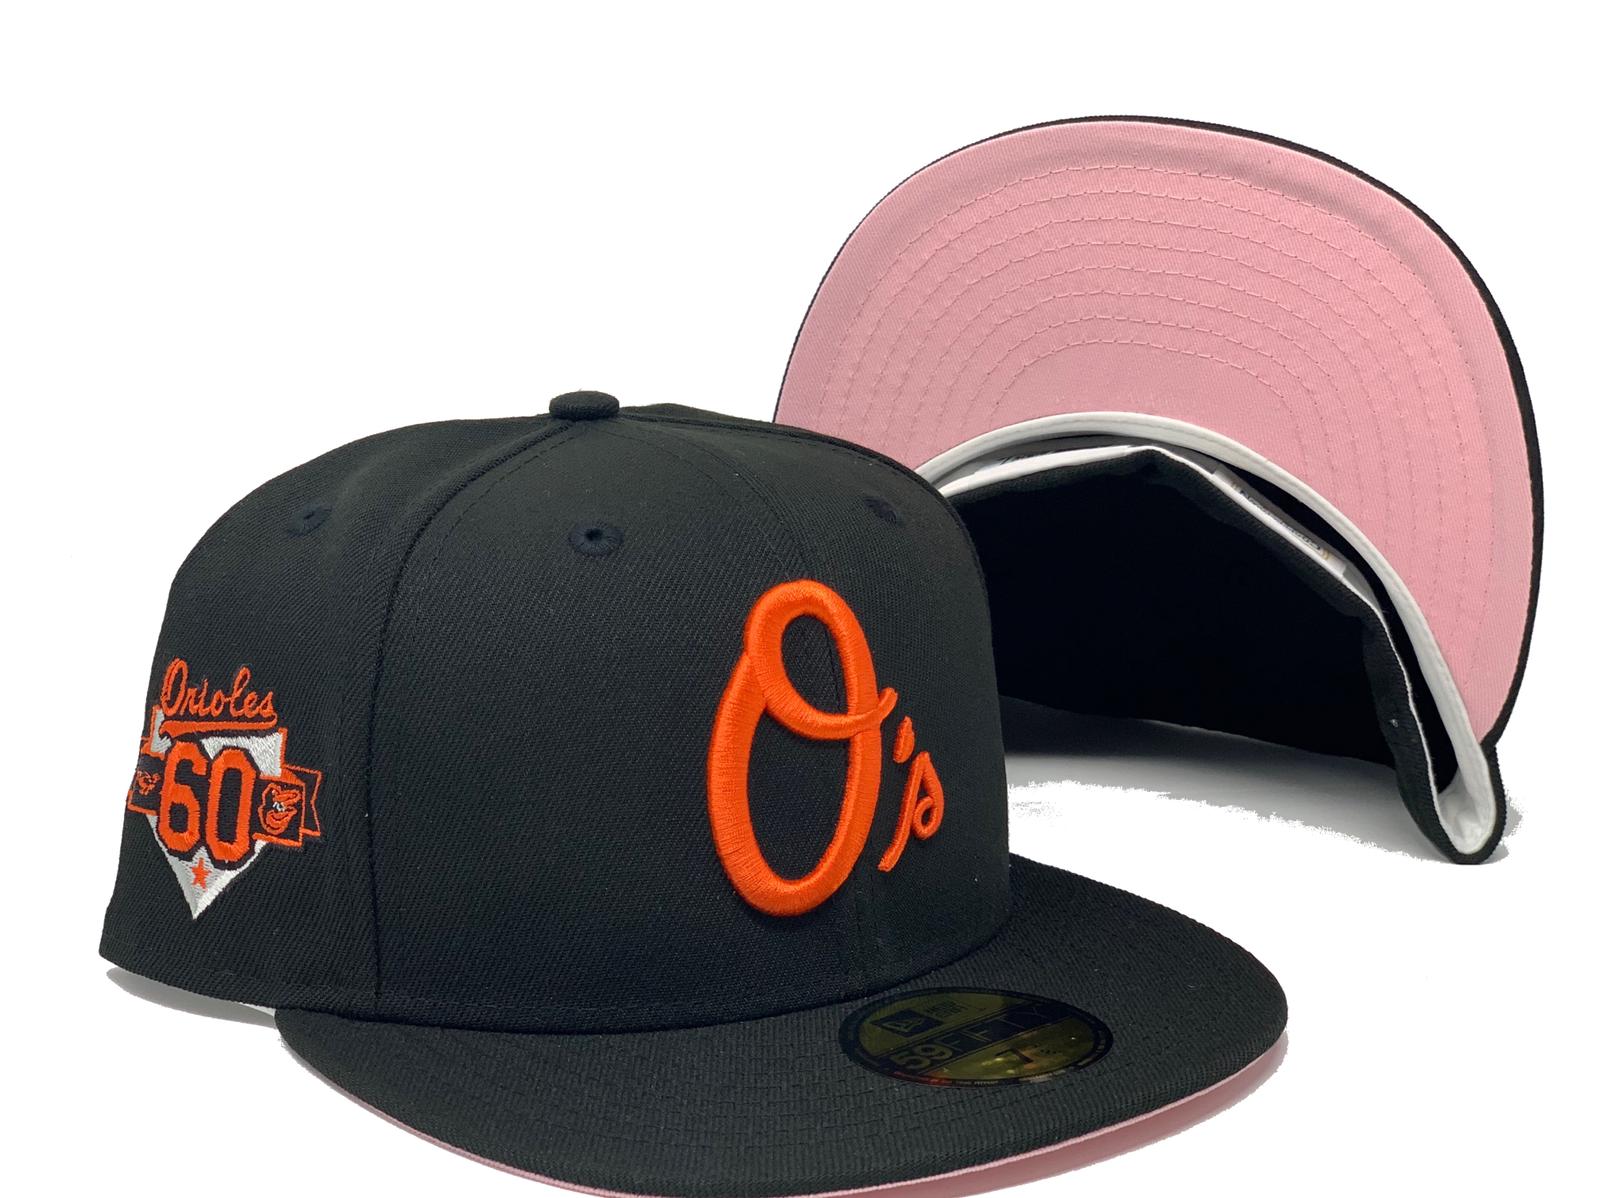 Mlb Baltimore Orioles Baseball Team Pink Ribbon Together We Fight 2023 Shirt  - Hersmiles